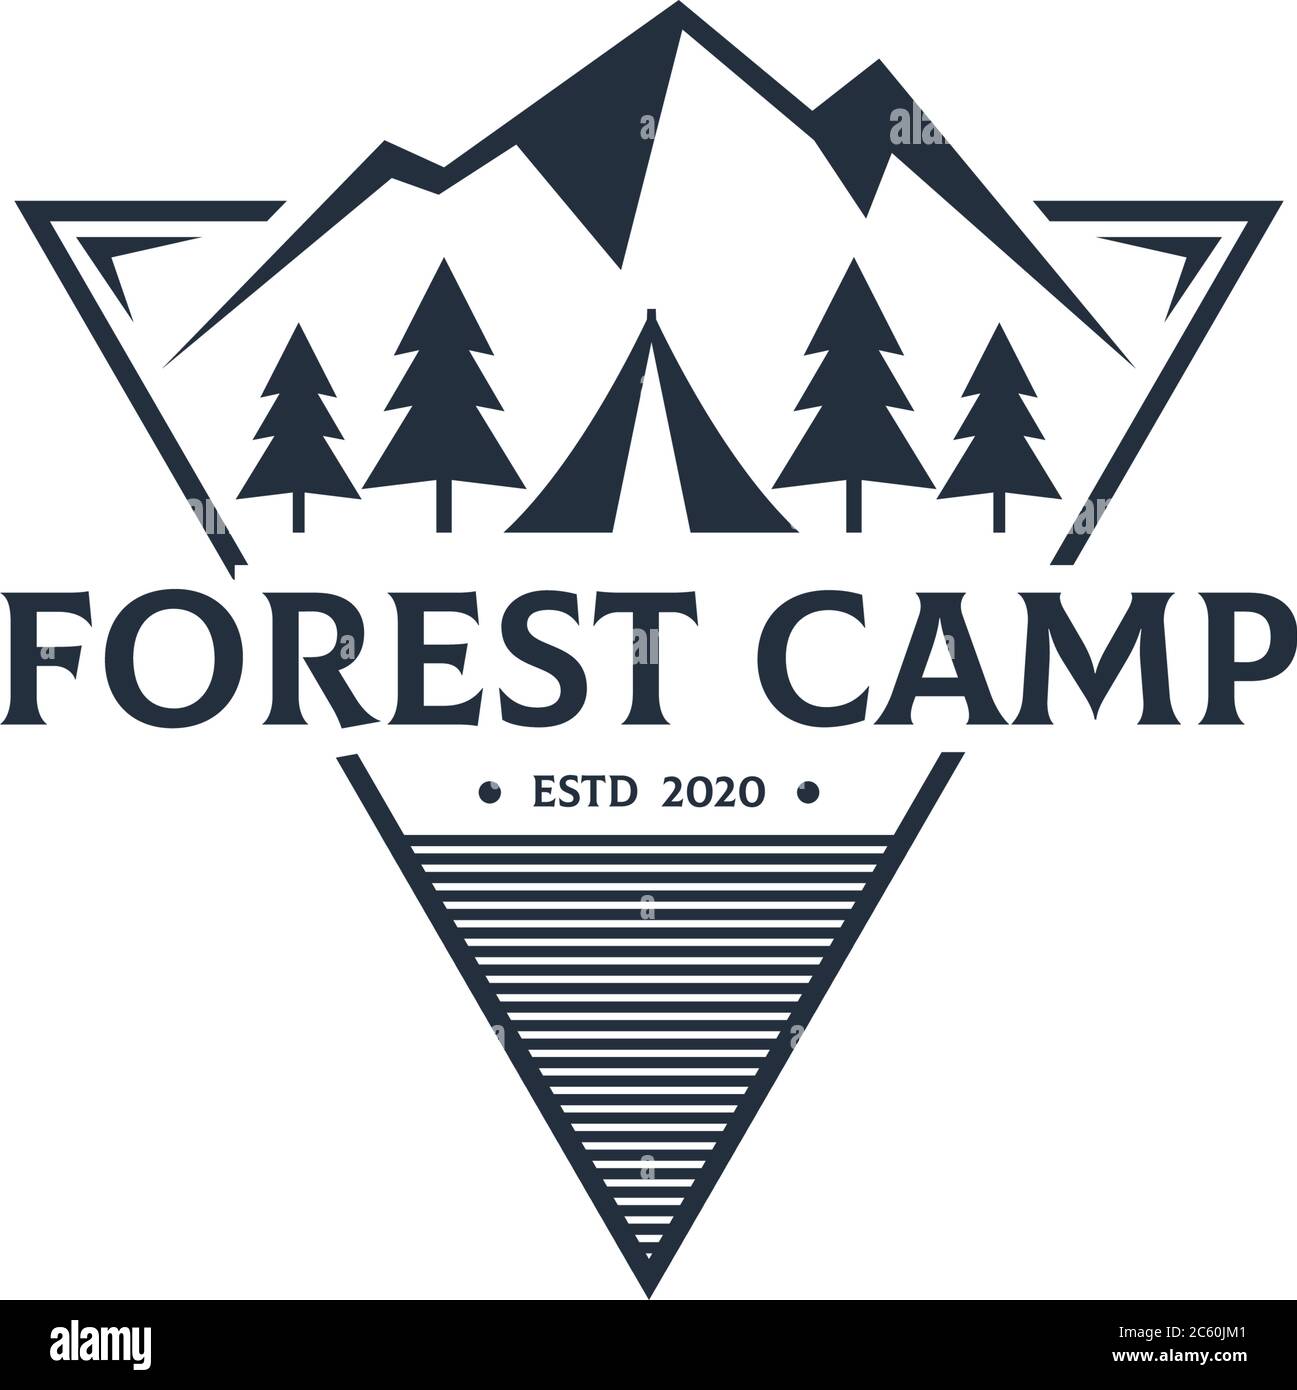 Kreative Forest Camp Outdoor Logo Design Vektor, am besten für Sport oder Erholung Logo etc Stock Vektor